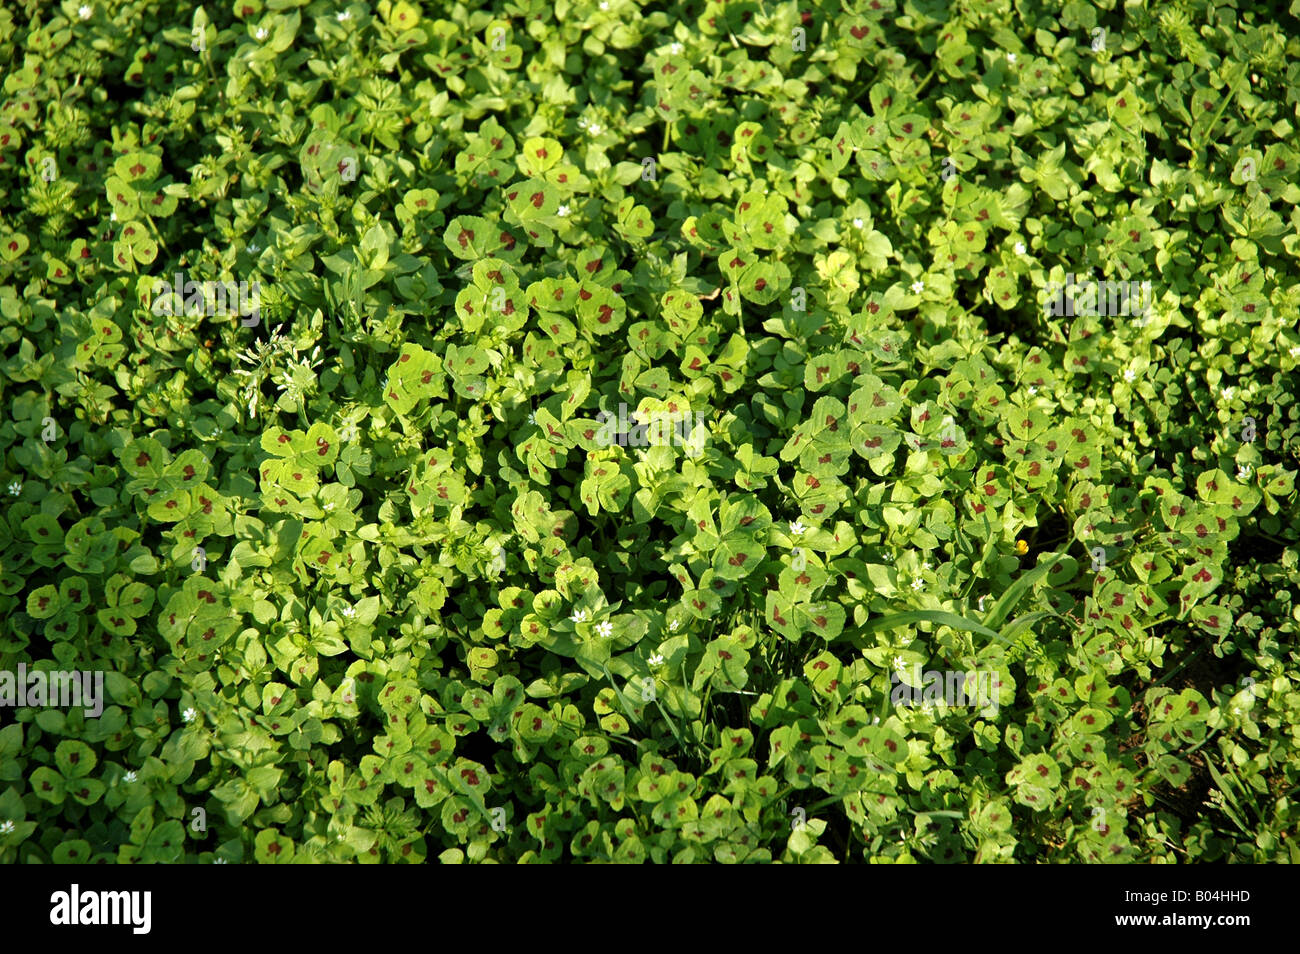 Sunny sonnig cuori Herzen verde trifoglio Grün Klee molla Frühling piante botaniche Pflanzen Nahaufnahme Close up Foto Stock